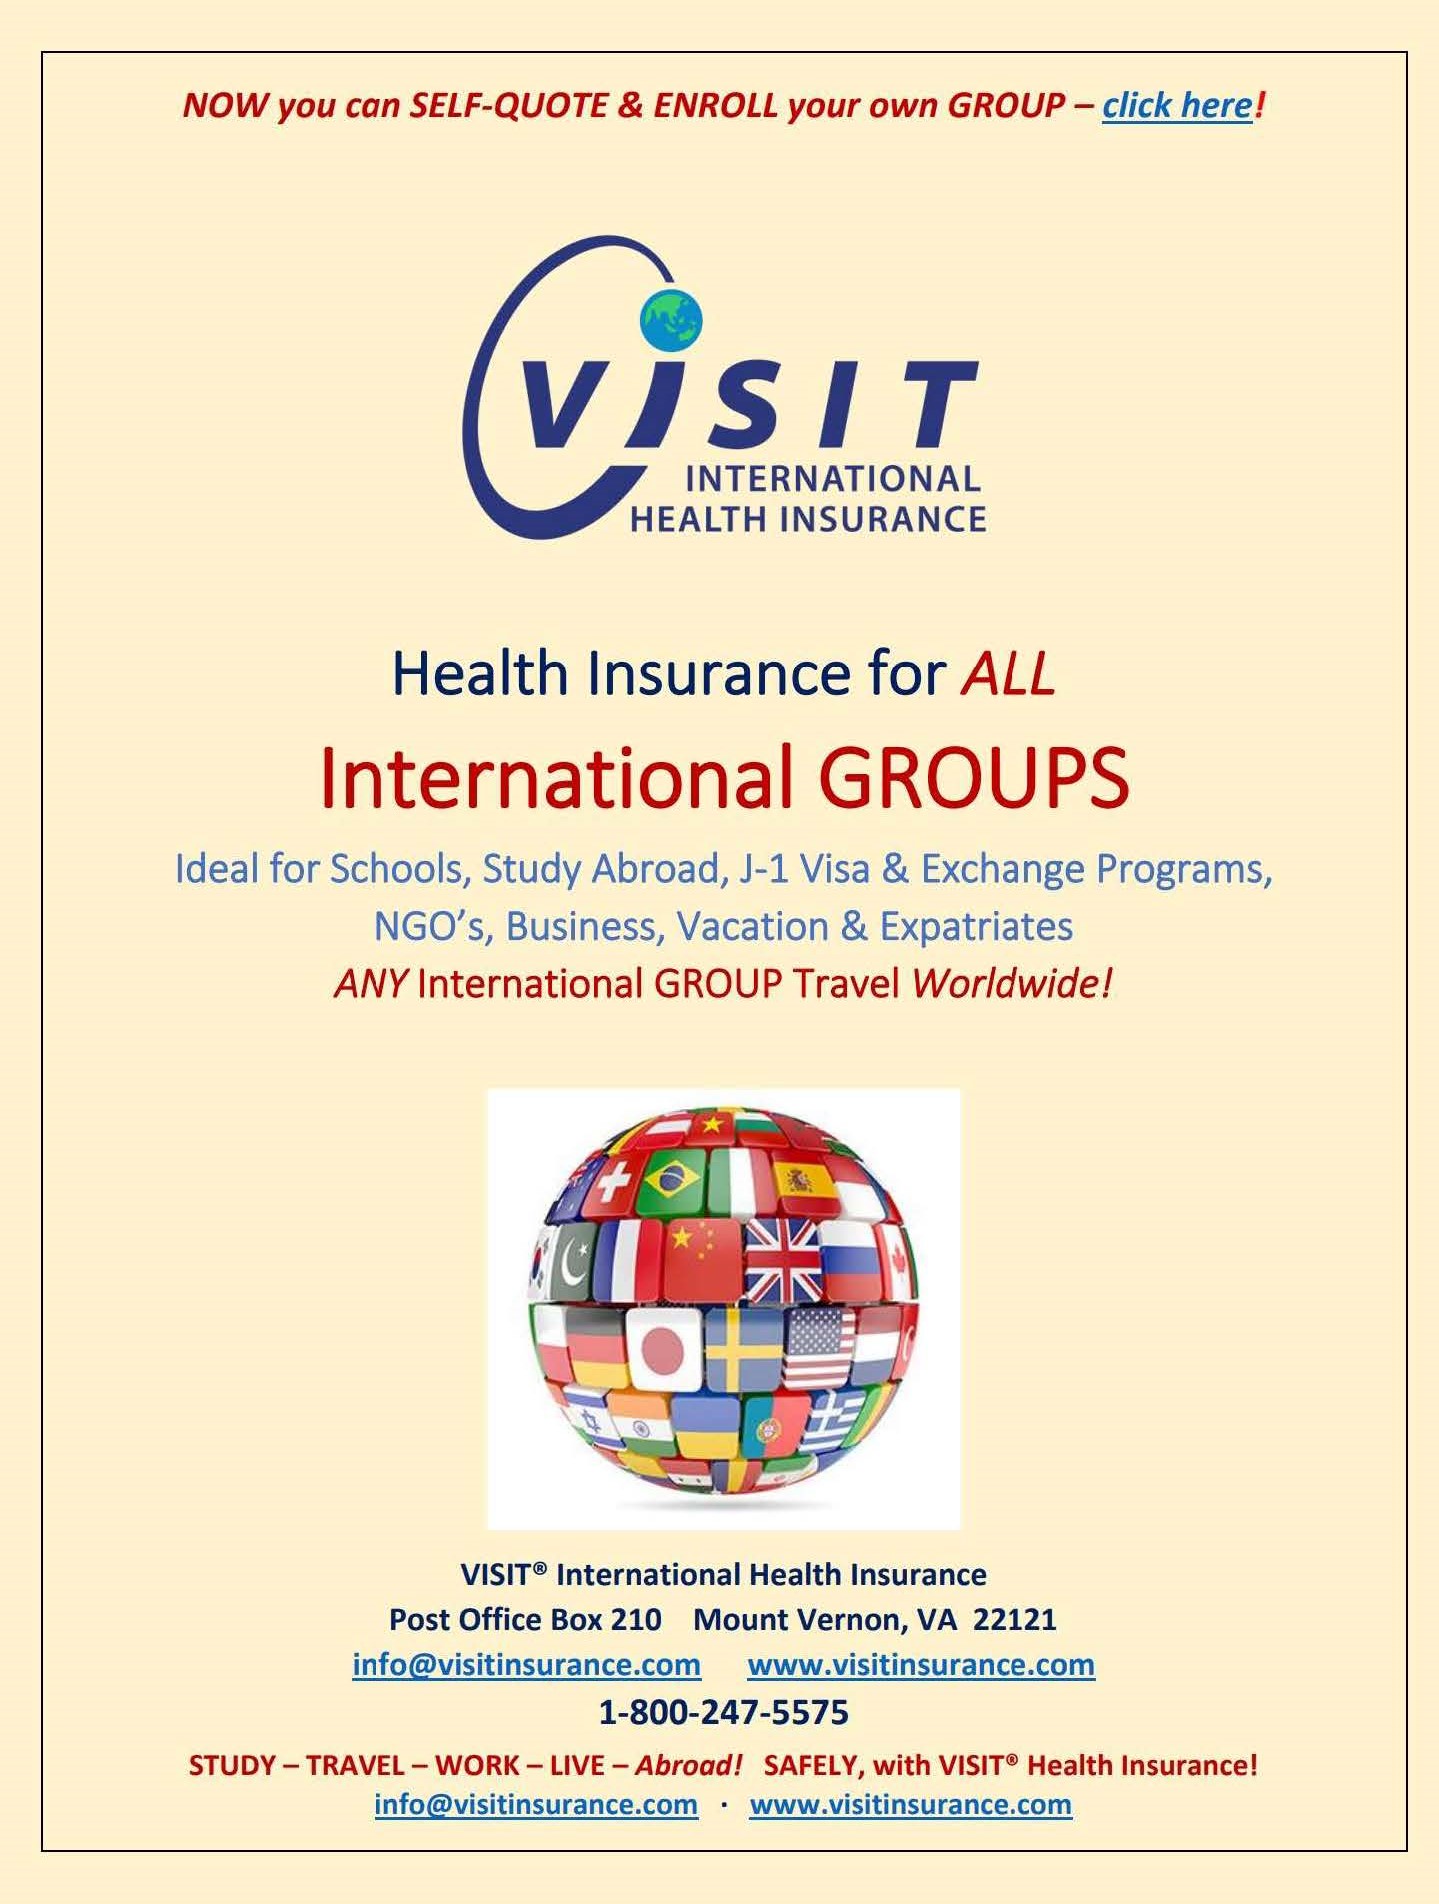 VISIT Group Brochure